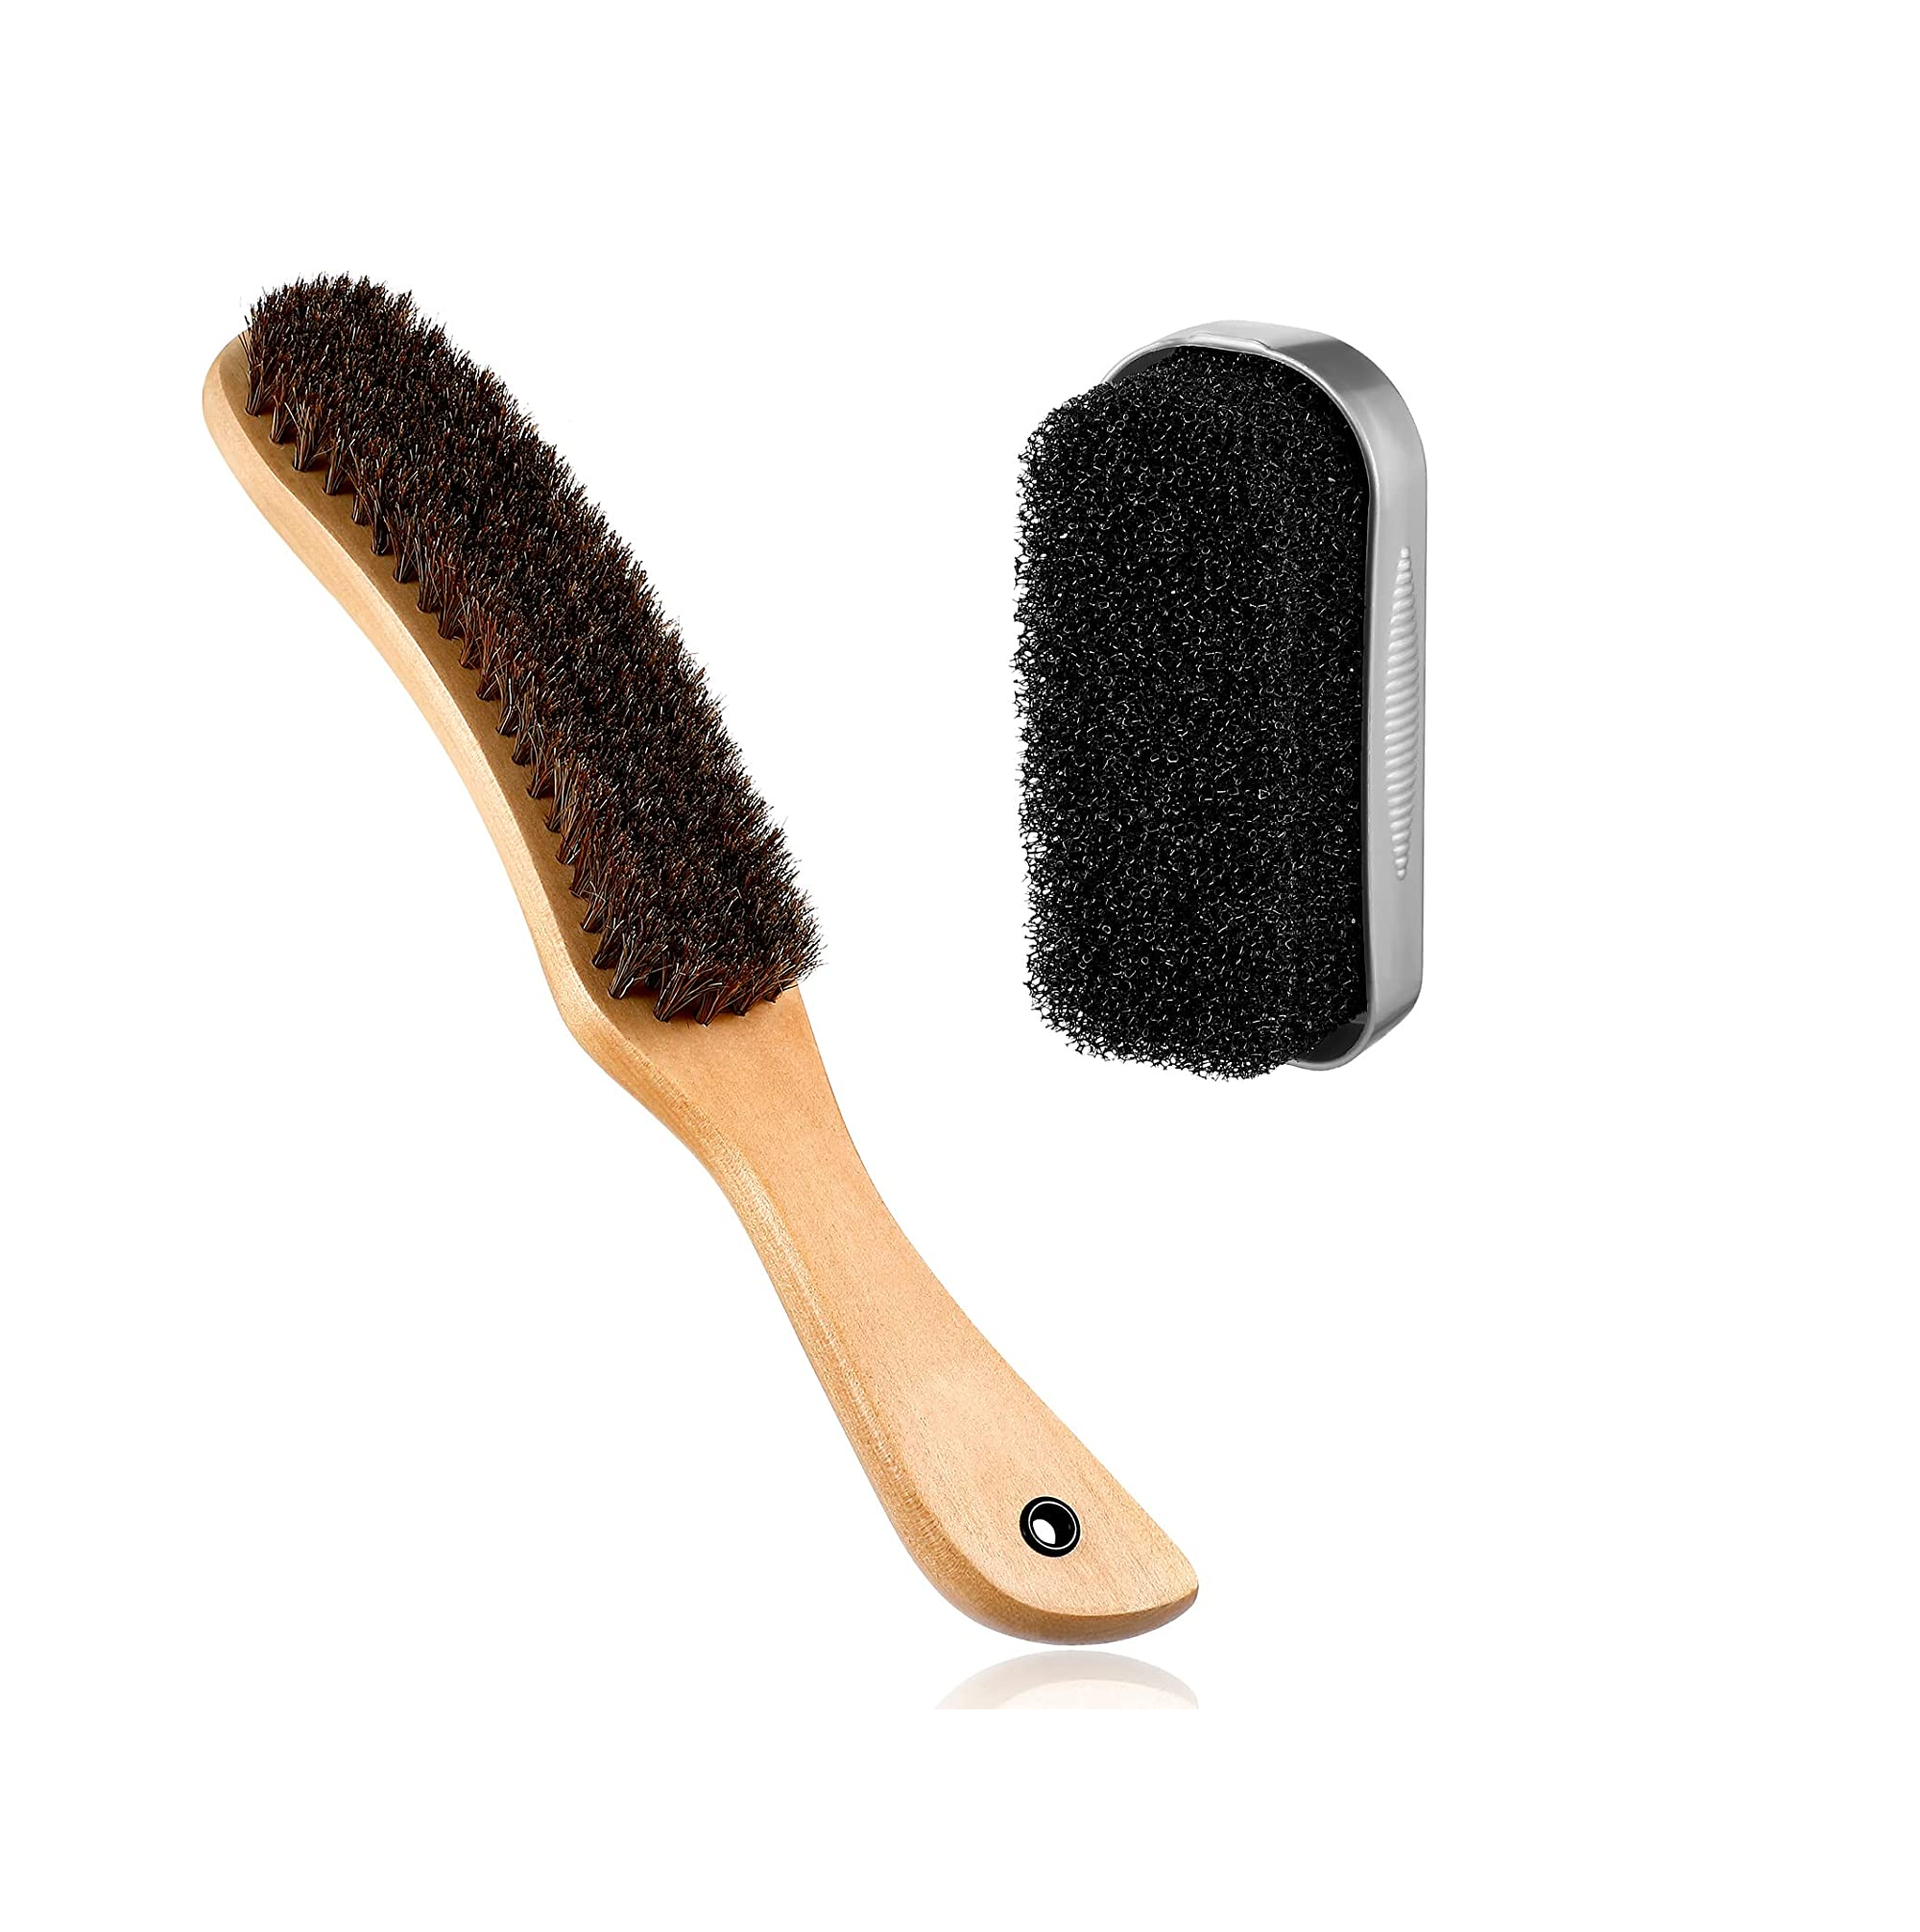 Liquid Adding Soft Fur Cleaning Brush, Multifunctional Shoe Brush